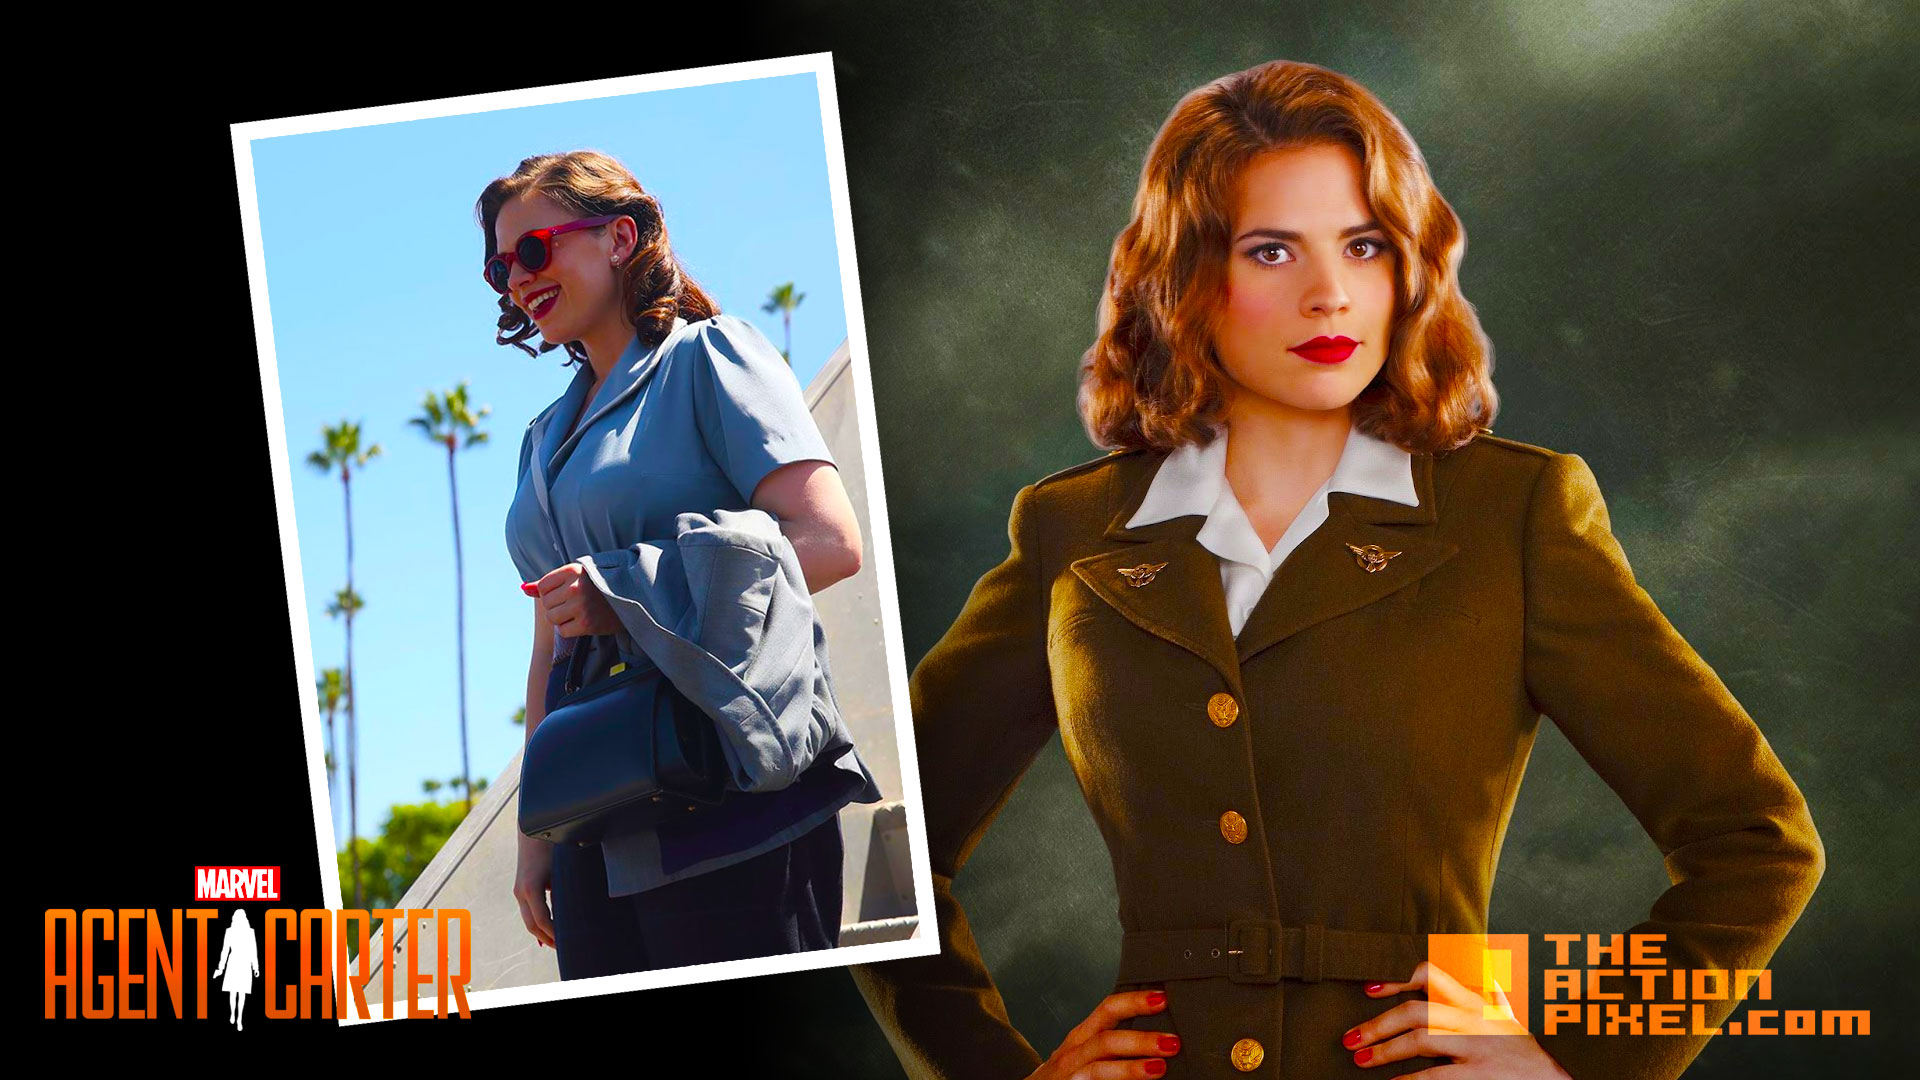 Marvel Agent Carter Season 1 Watch Online